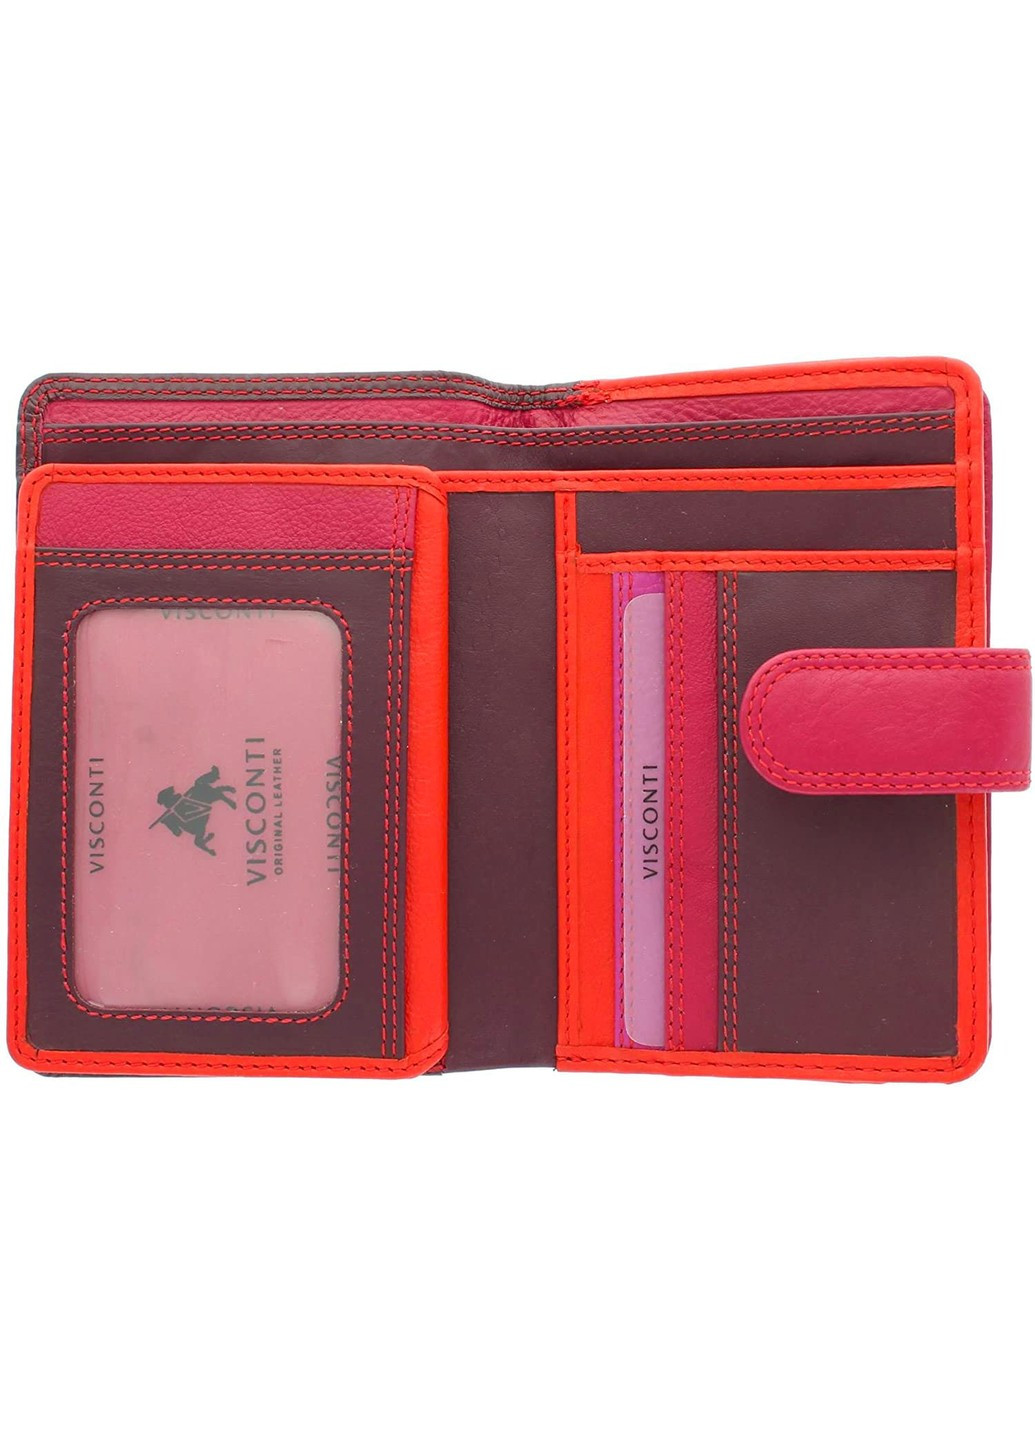 Женский кожаный кошелек RB51 - Fiji Visconti (254312071)